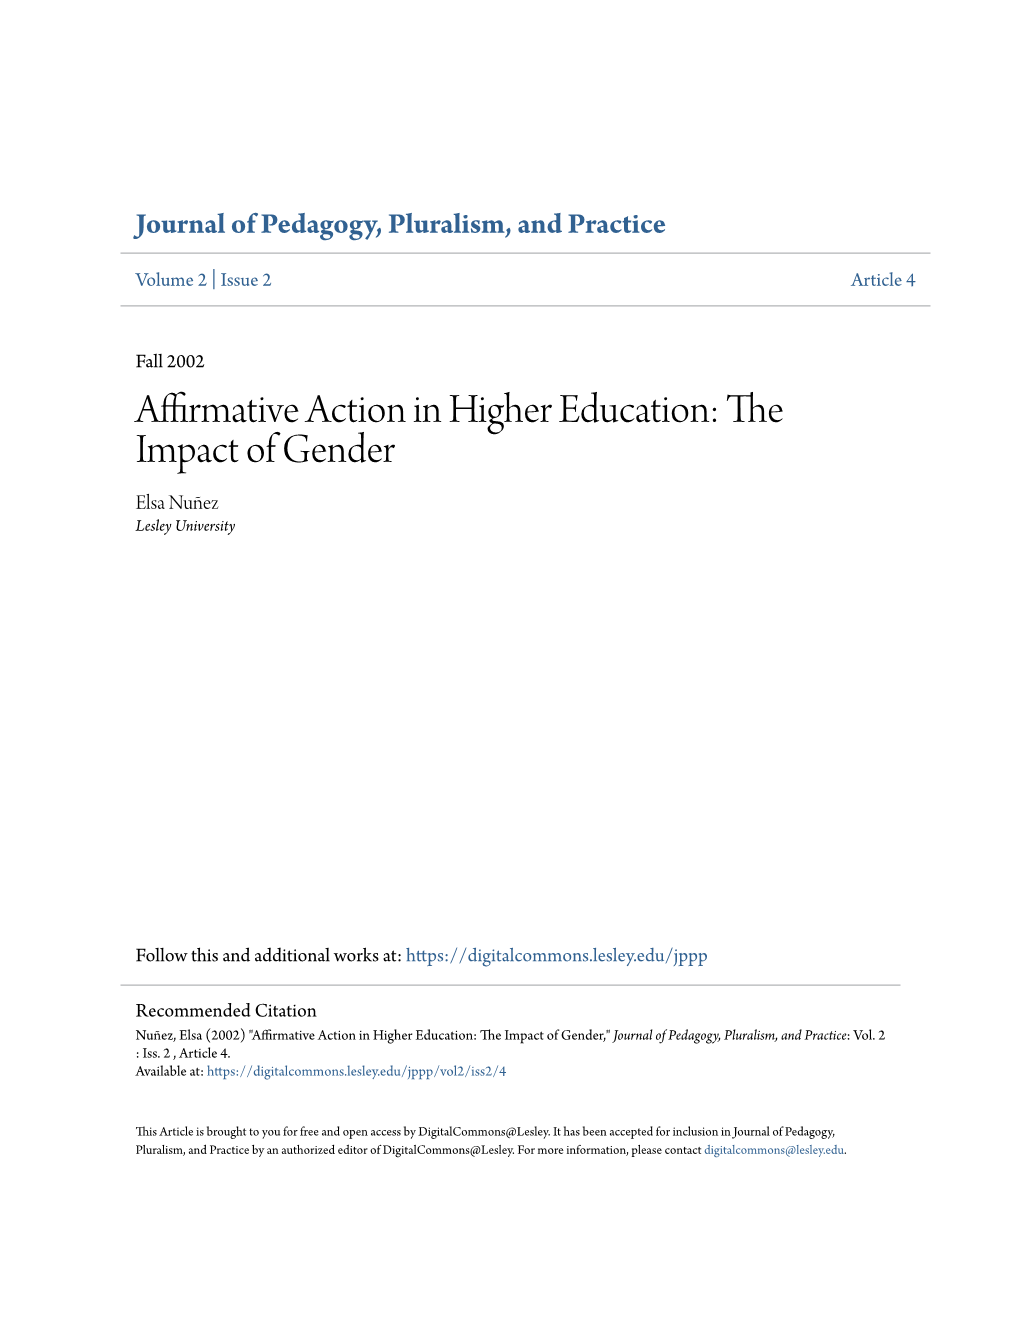 Affirmative Action in Higher Education: the Impact of Gender Elsa Nuñez Lesley University